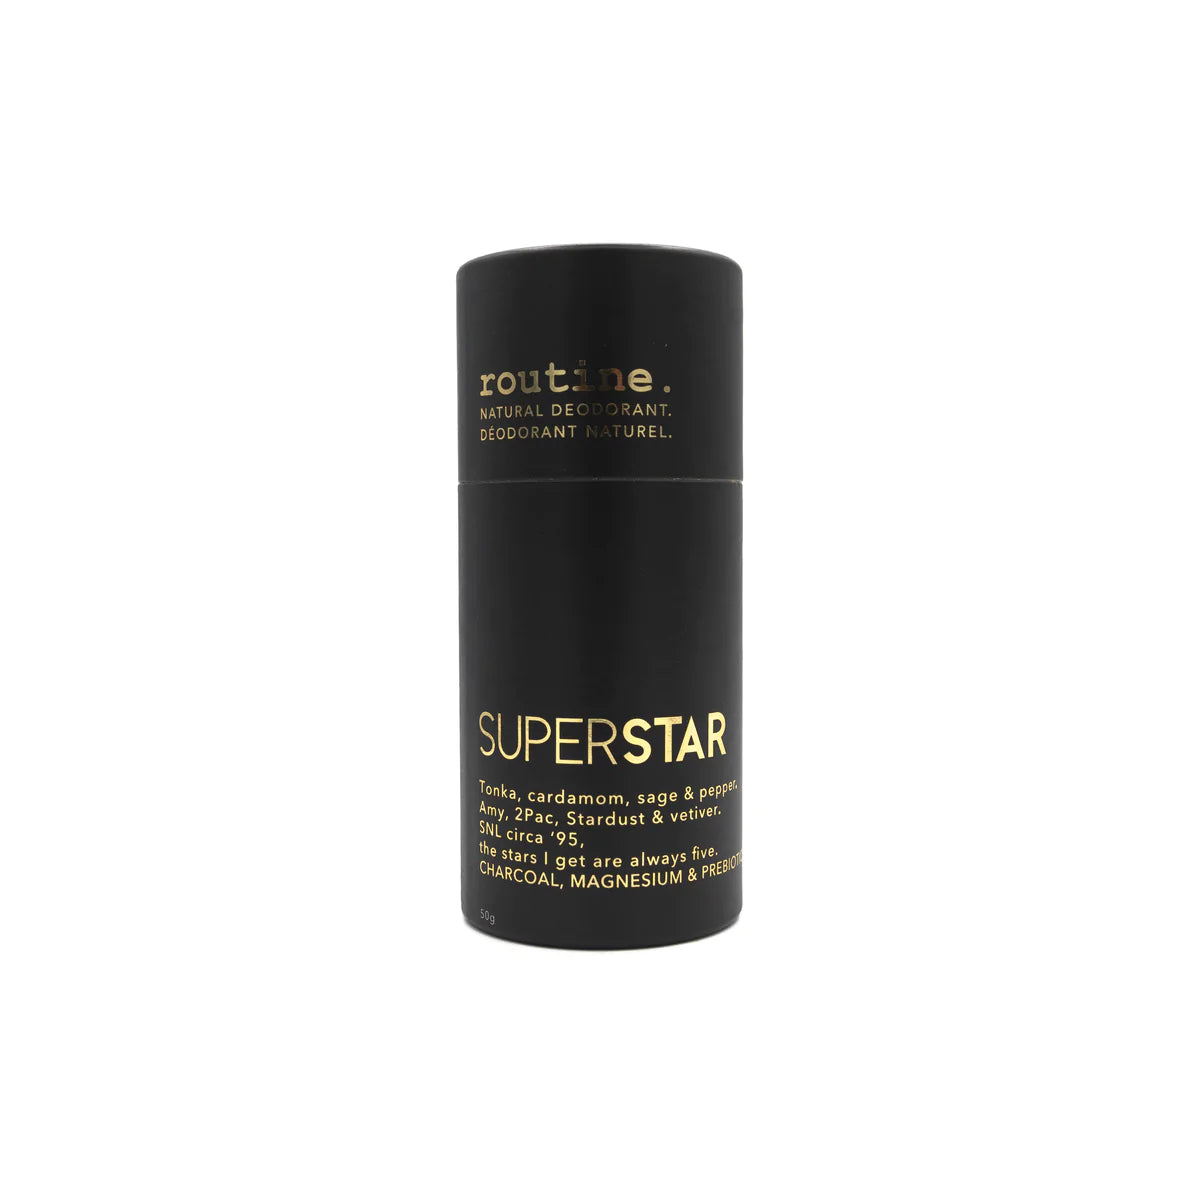 Superstar 50g Deodorant Stick